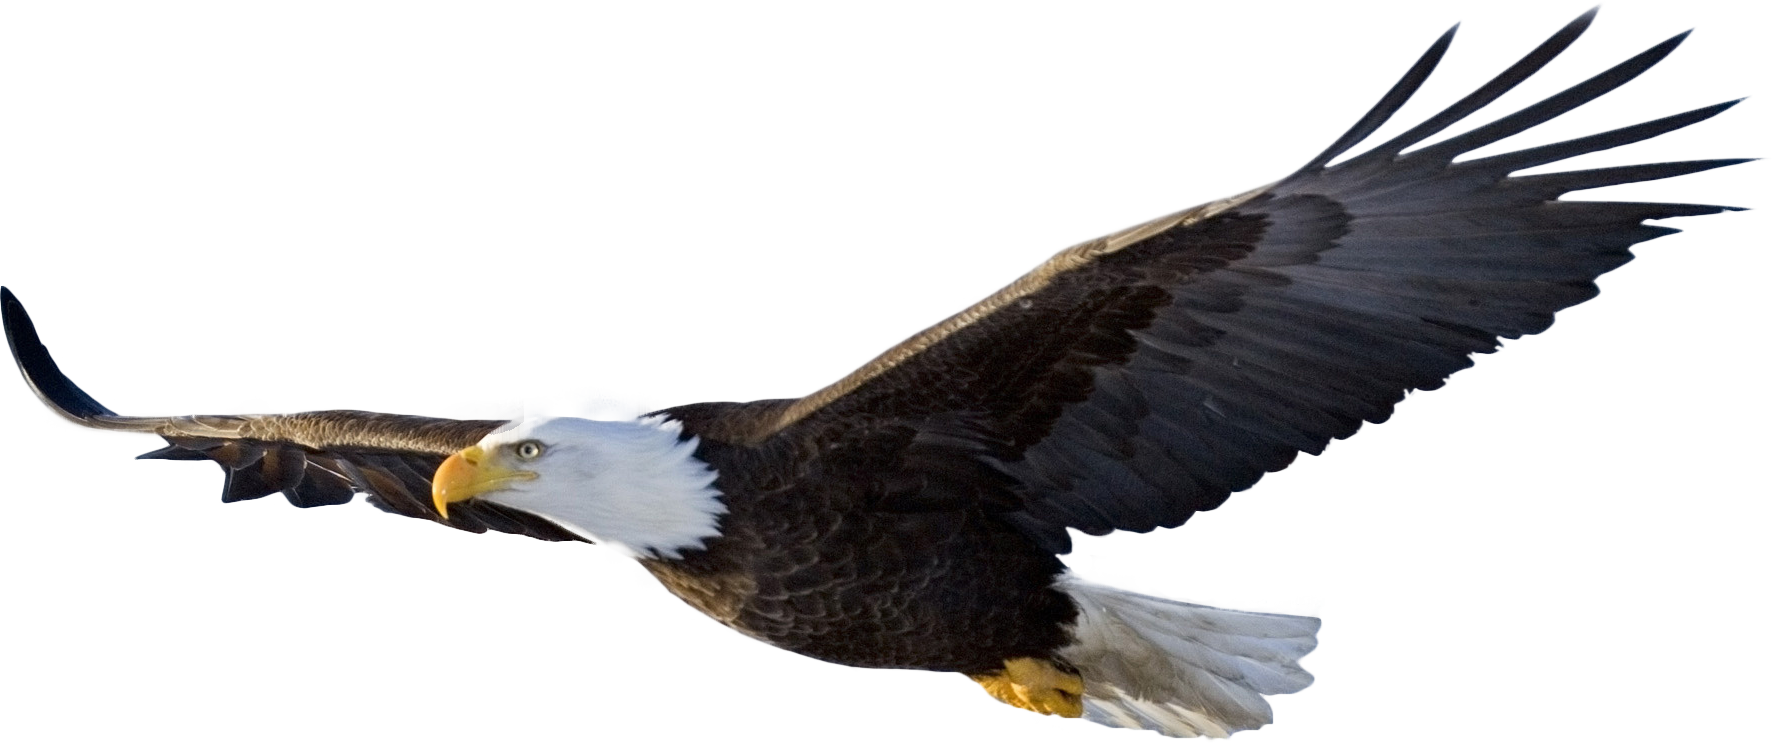 Eagle Claws